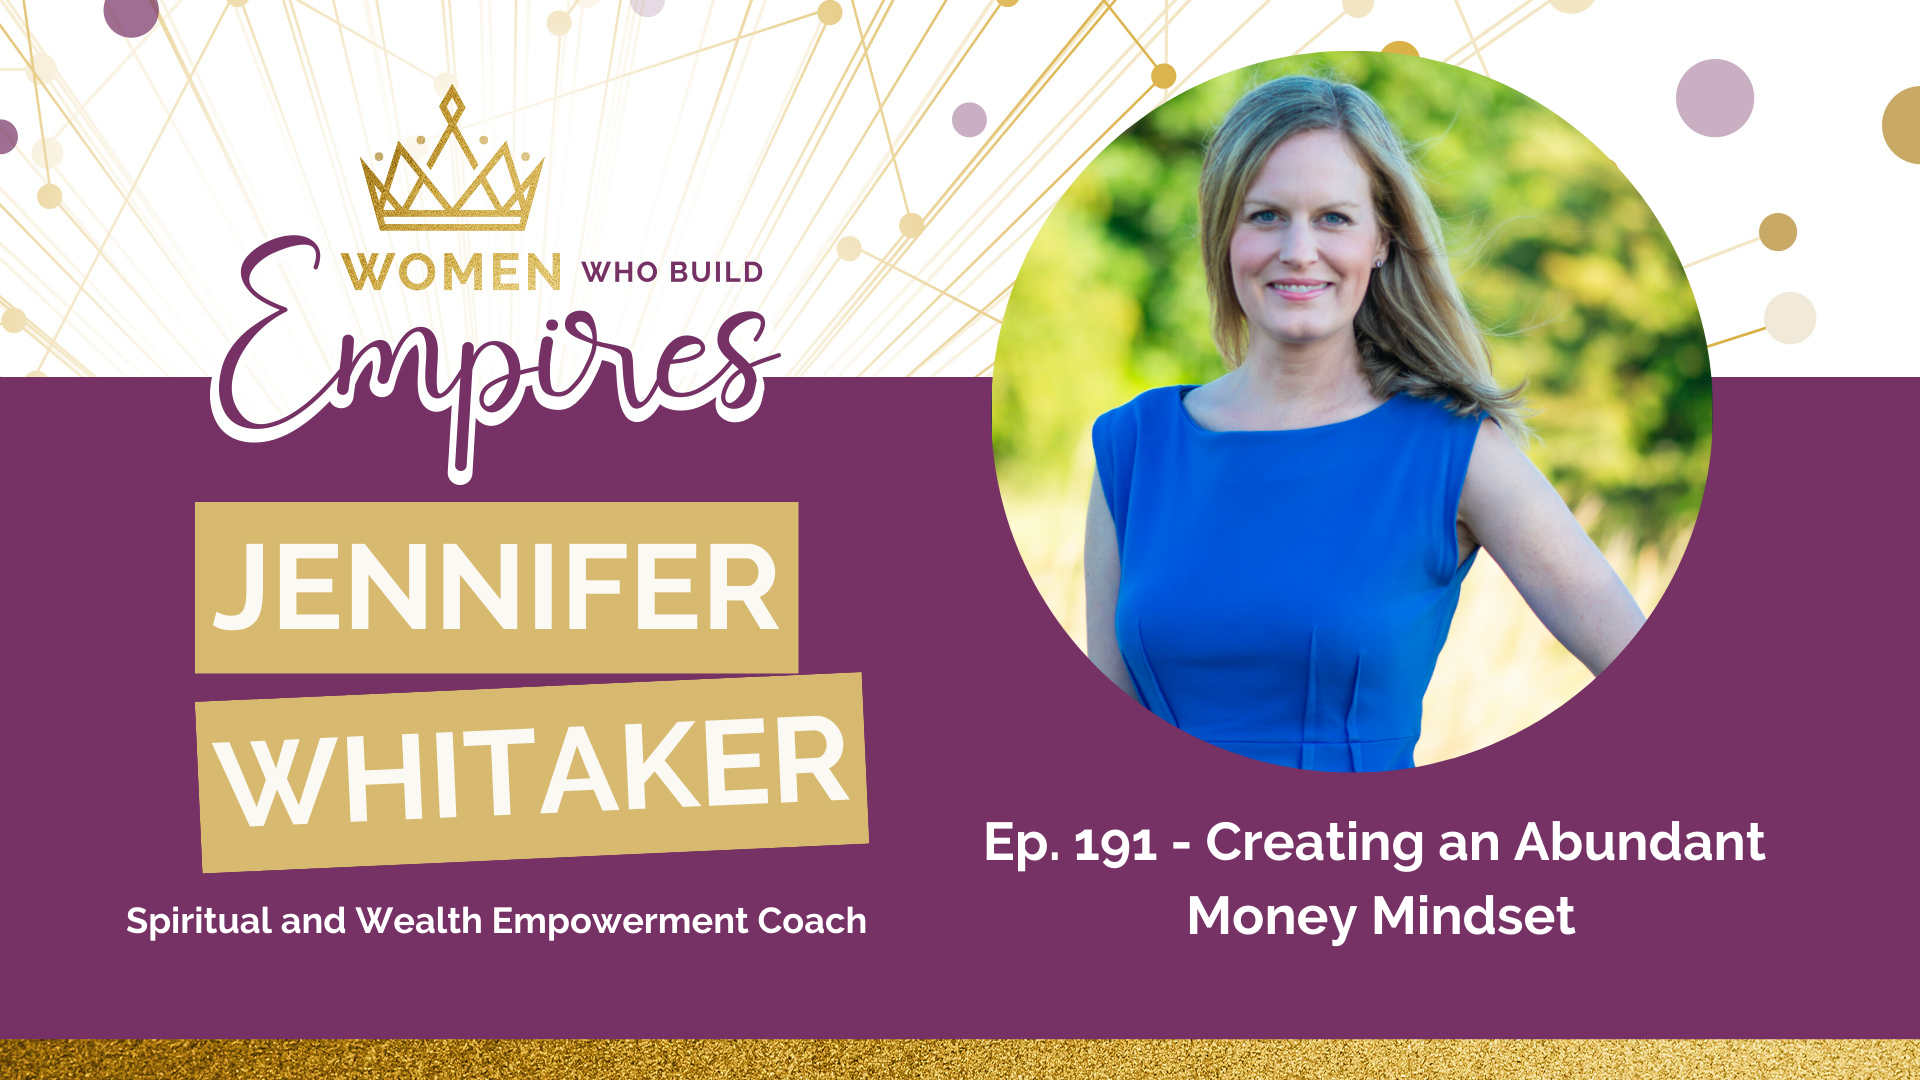 Ep. 191 Jennifer Whitaker: Creating an Abundant Money Mindset